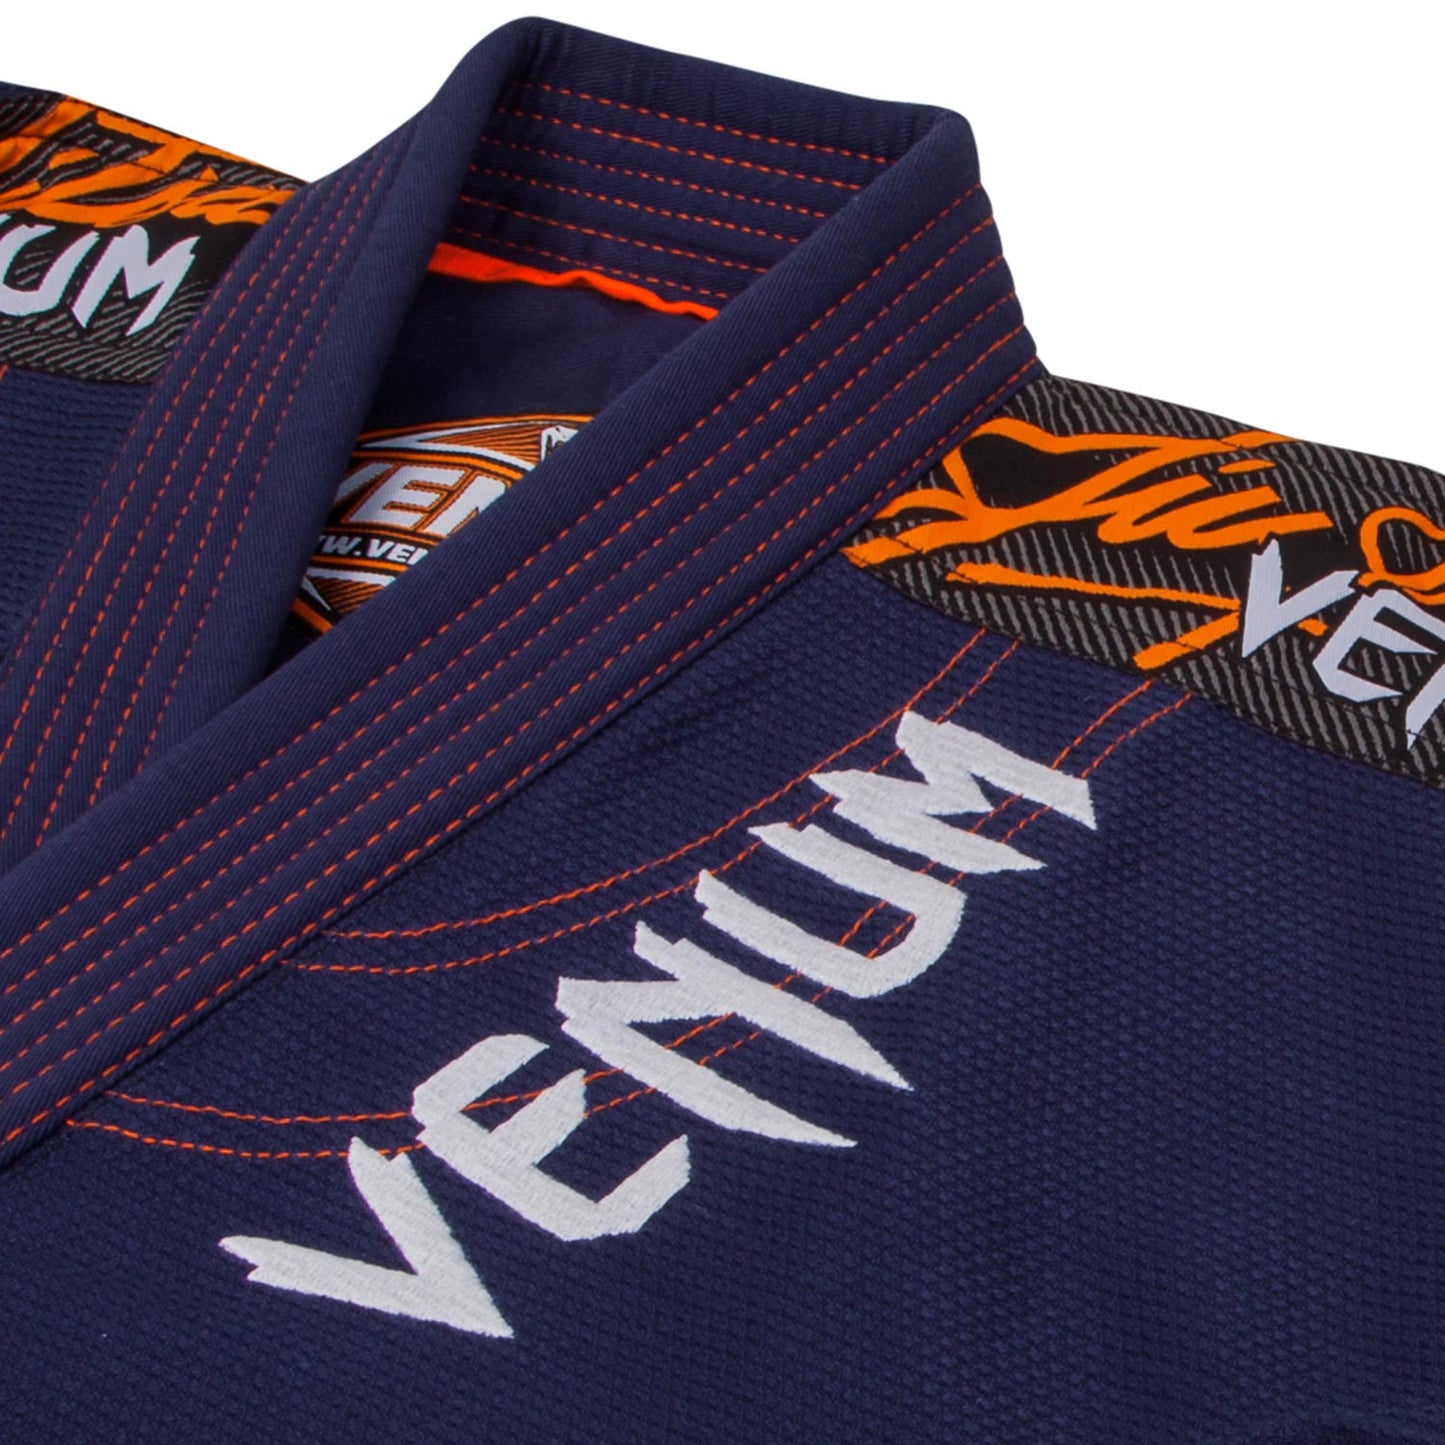 Kimono de BJJ Venum Challenger 3.0 - Azul Marino/Naranja